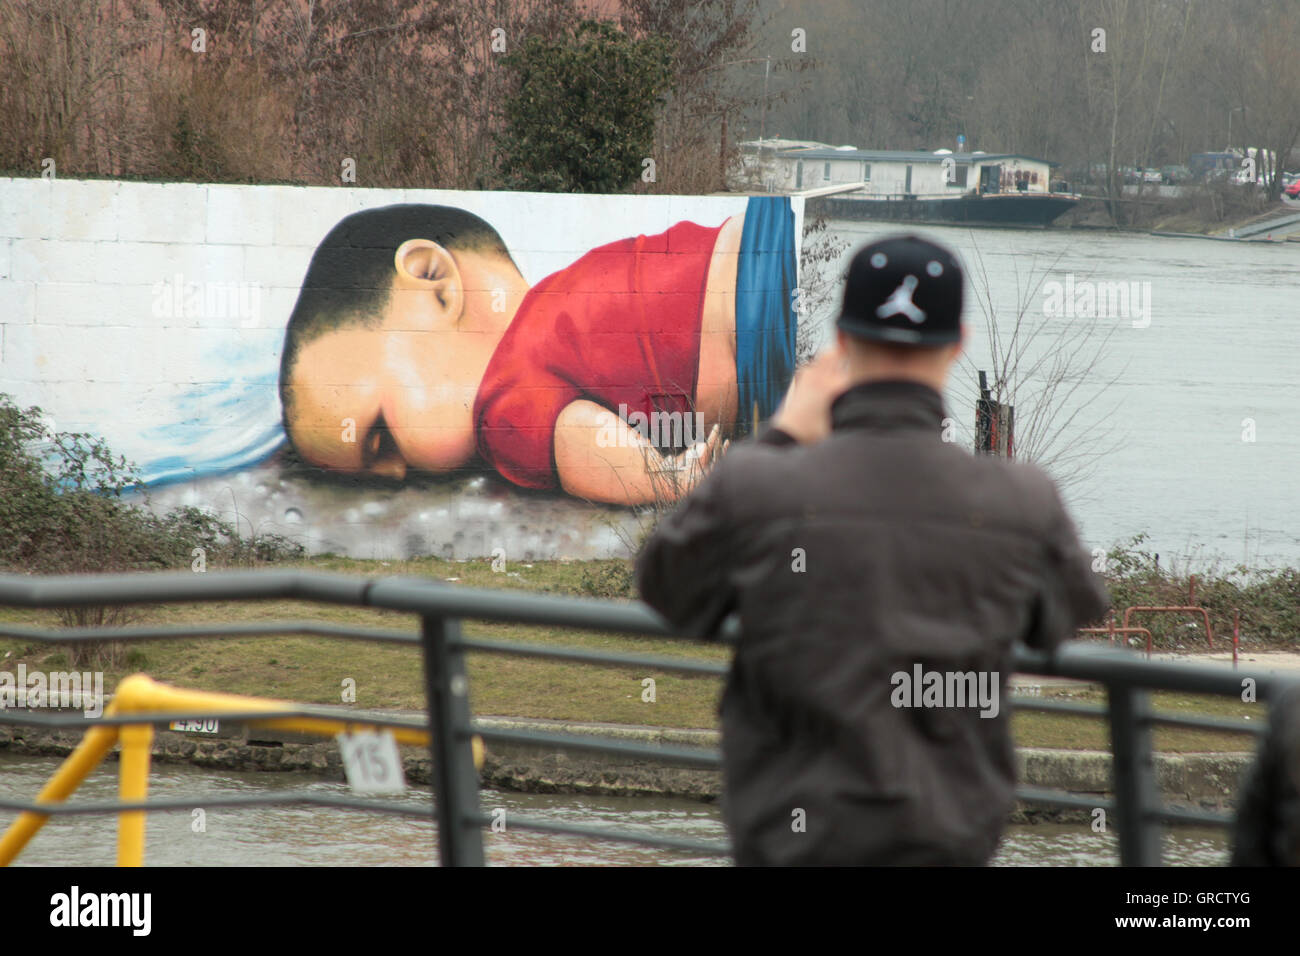 Graffiti Spraying Of Dead Refugee Child Aylan Kurdi Od Syria. Public Art Piece Sponsored By City Of Frankfurt Stock Photo